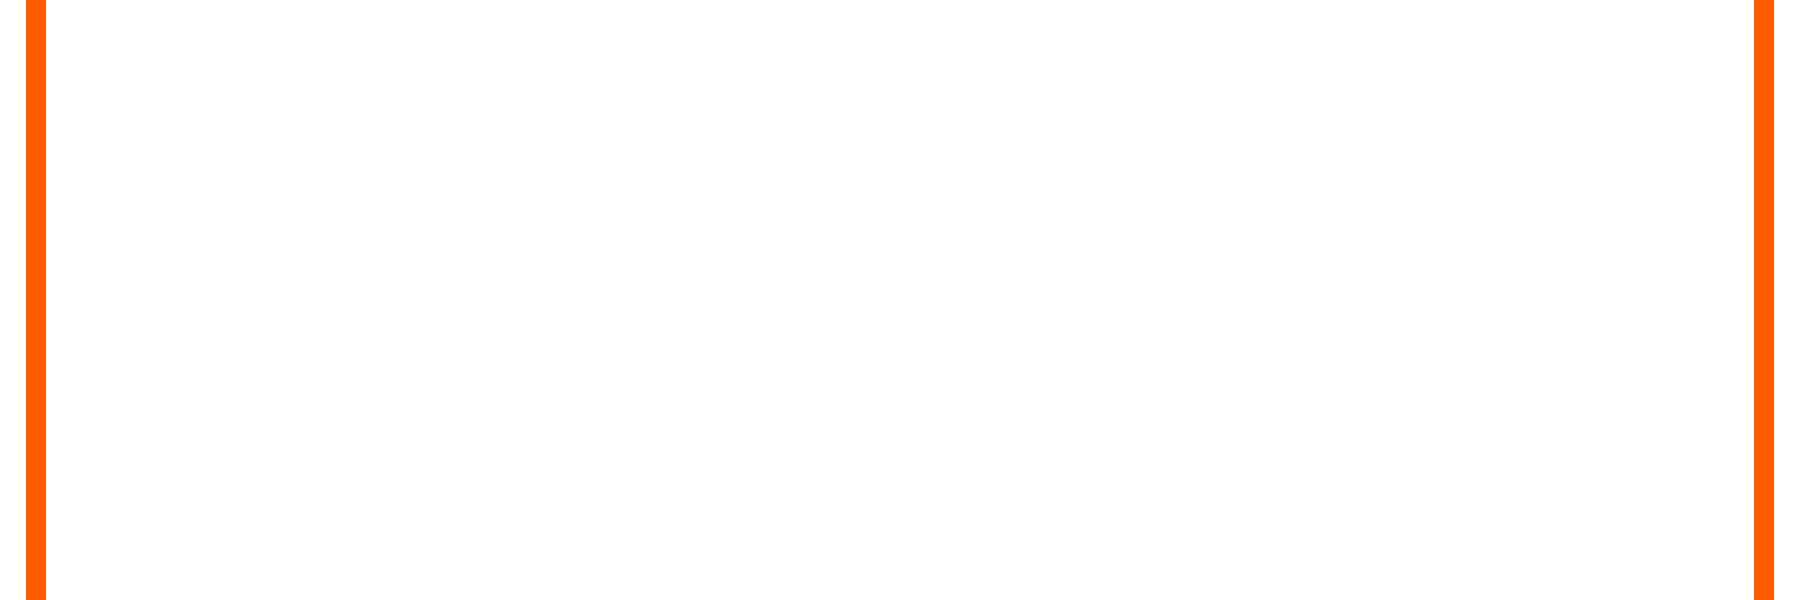 Logo Communications Platform for Business